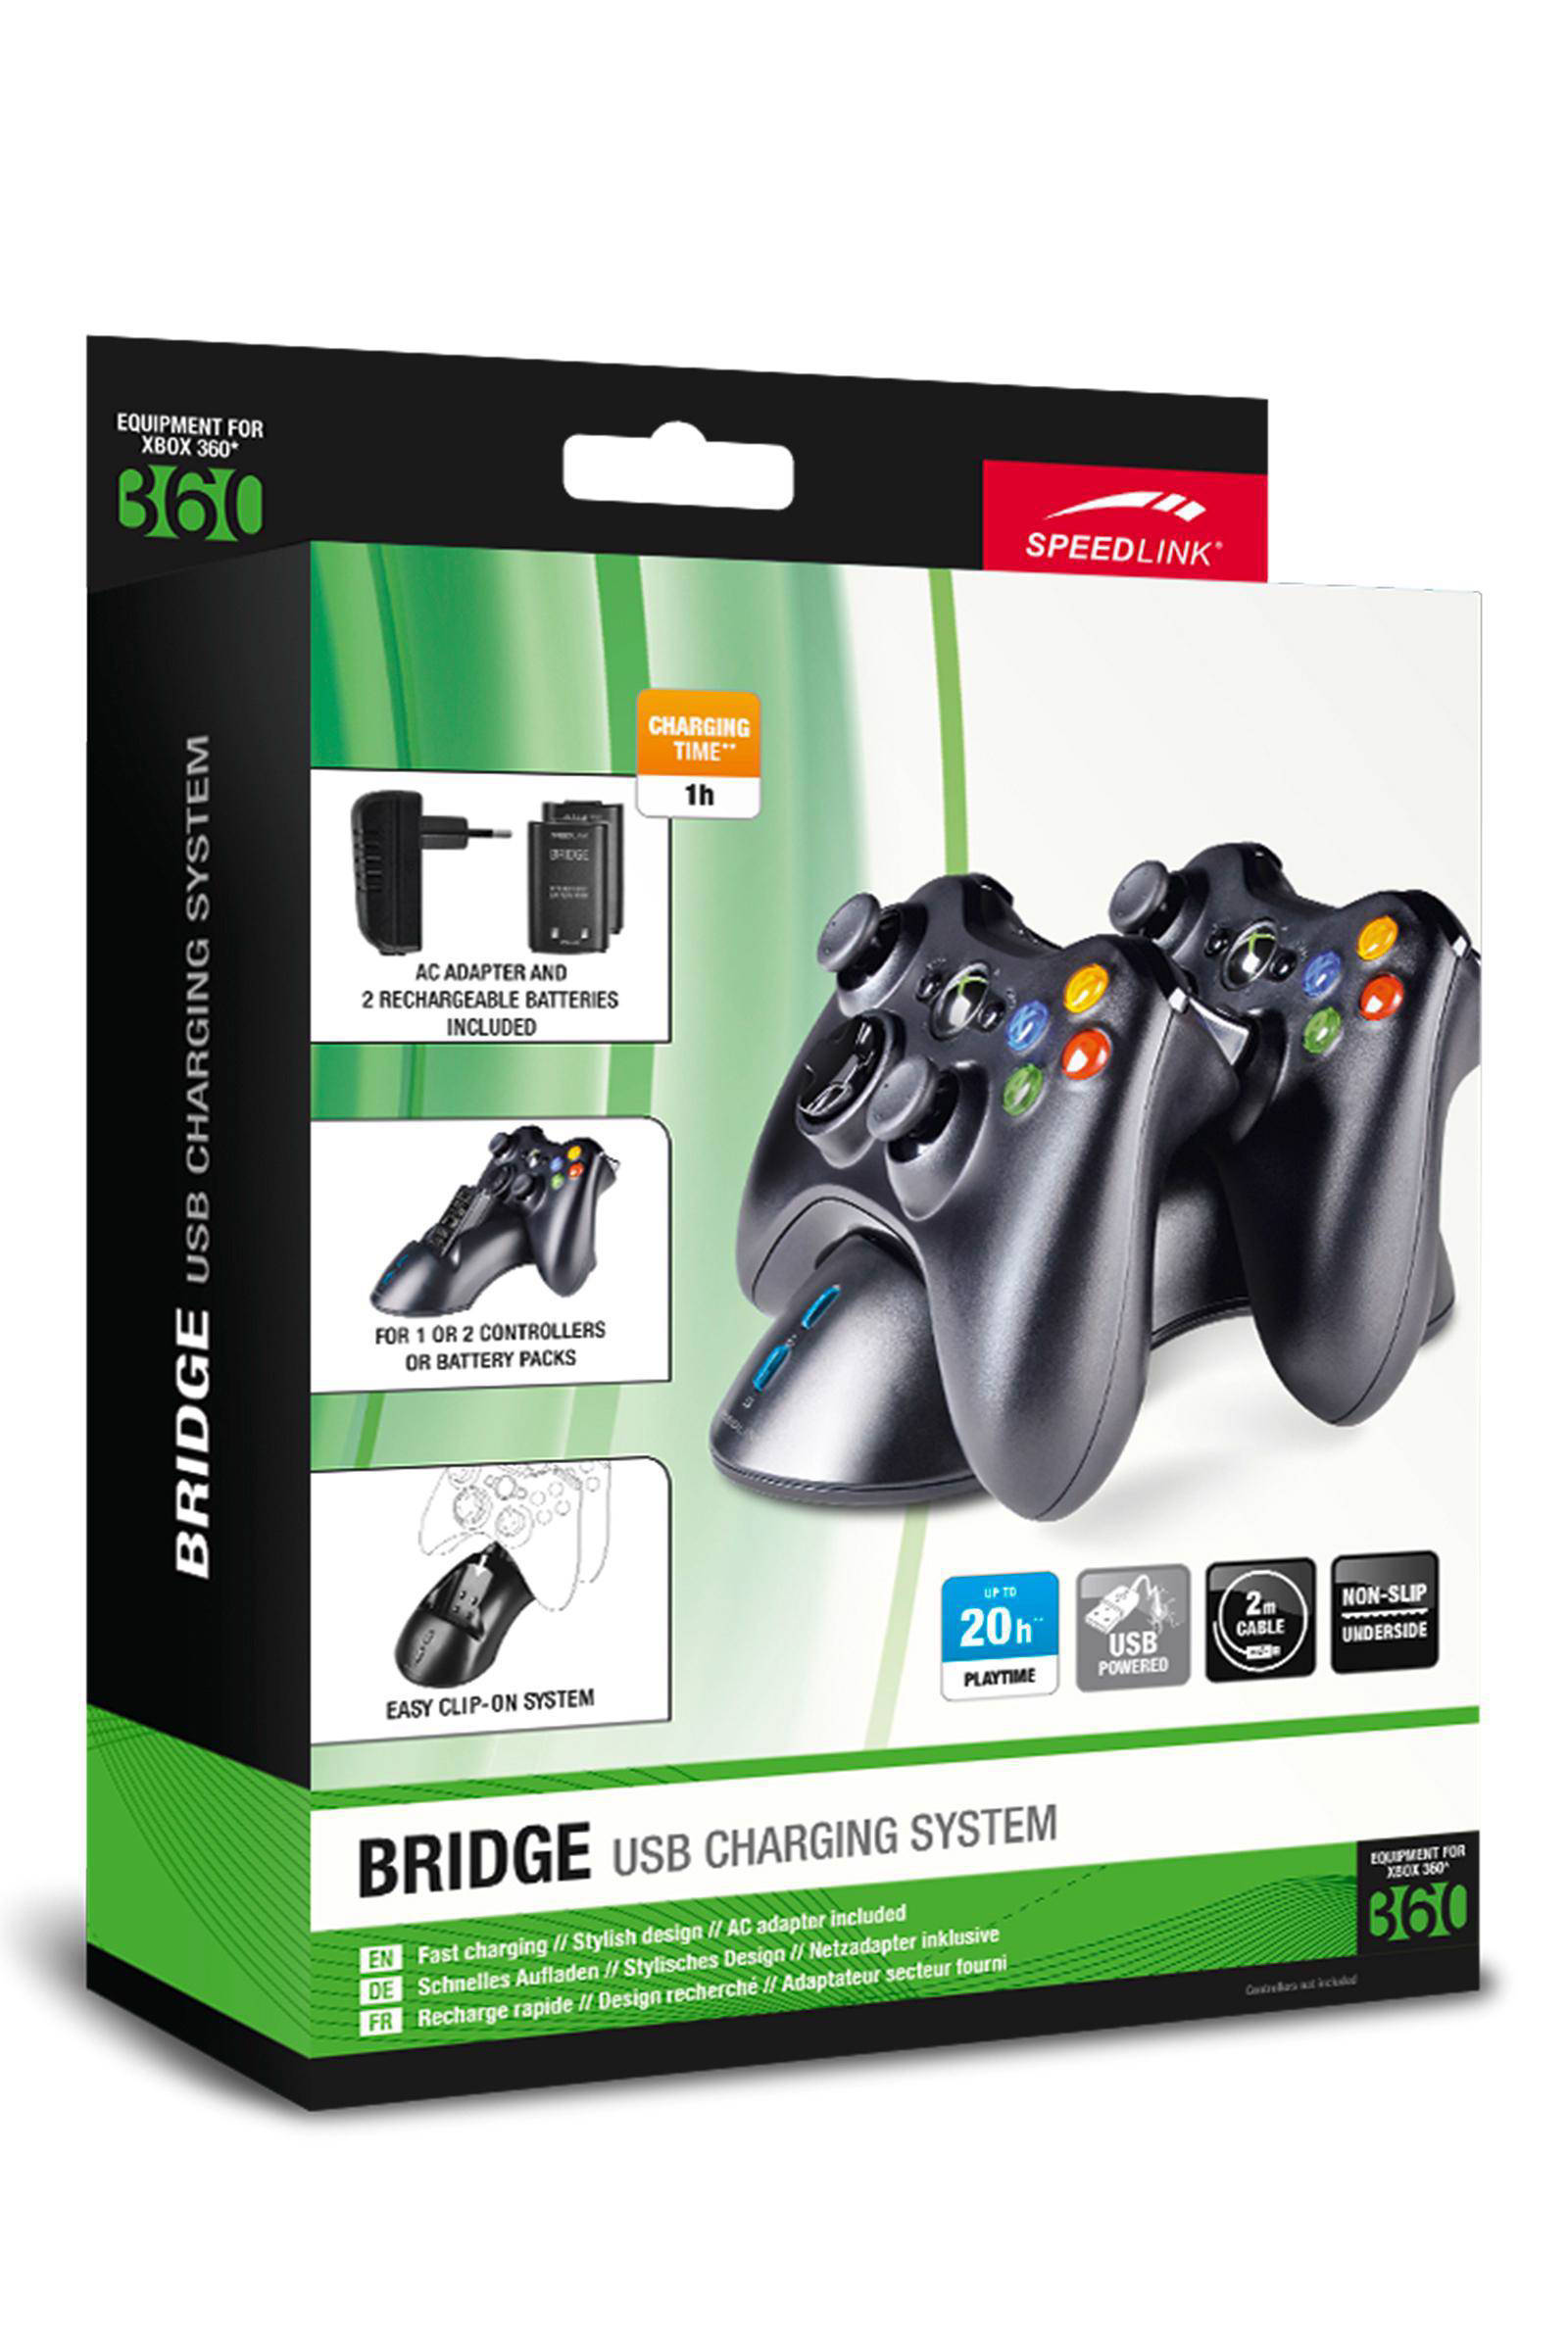 Xbox 360 SpeedLink Bridge USB Charging System